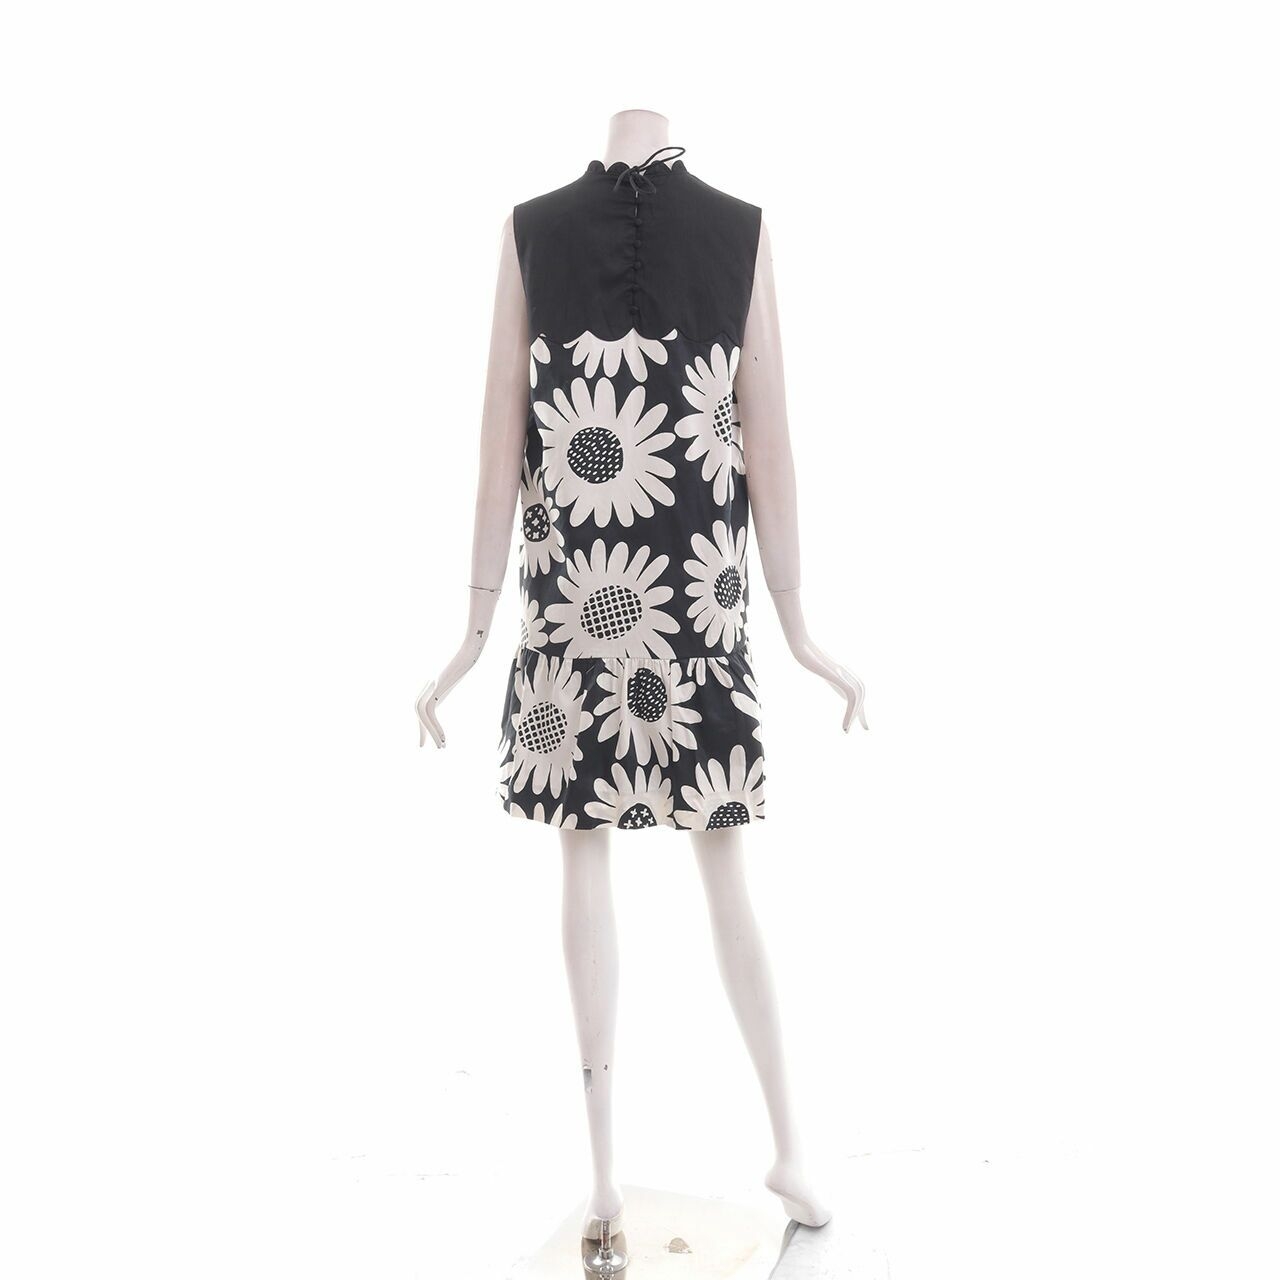 Victoria Beckham For Target Black & White Mini Dress